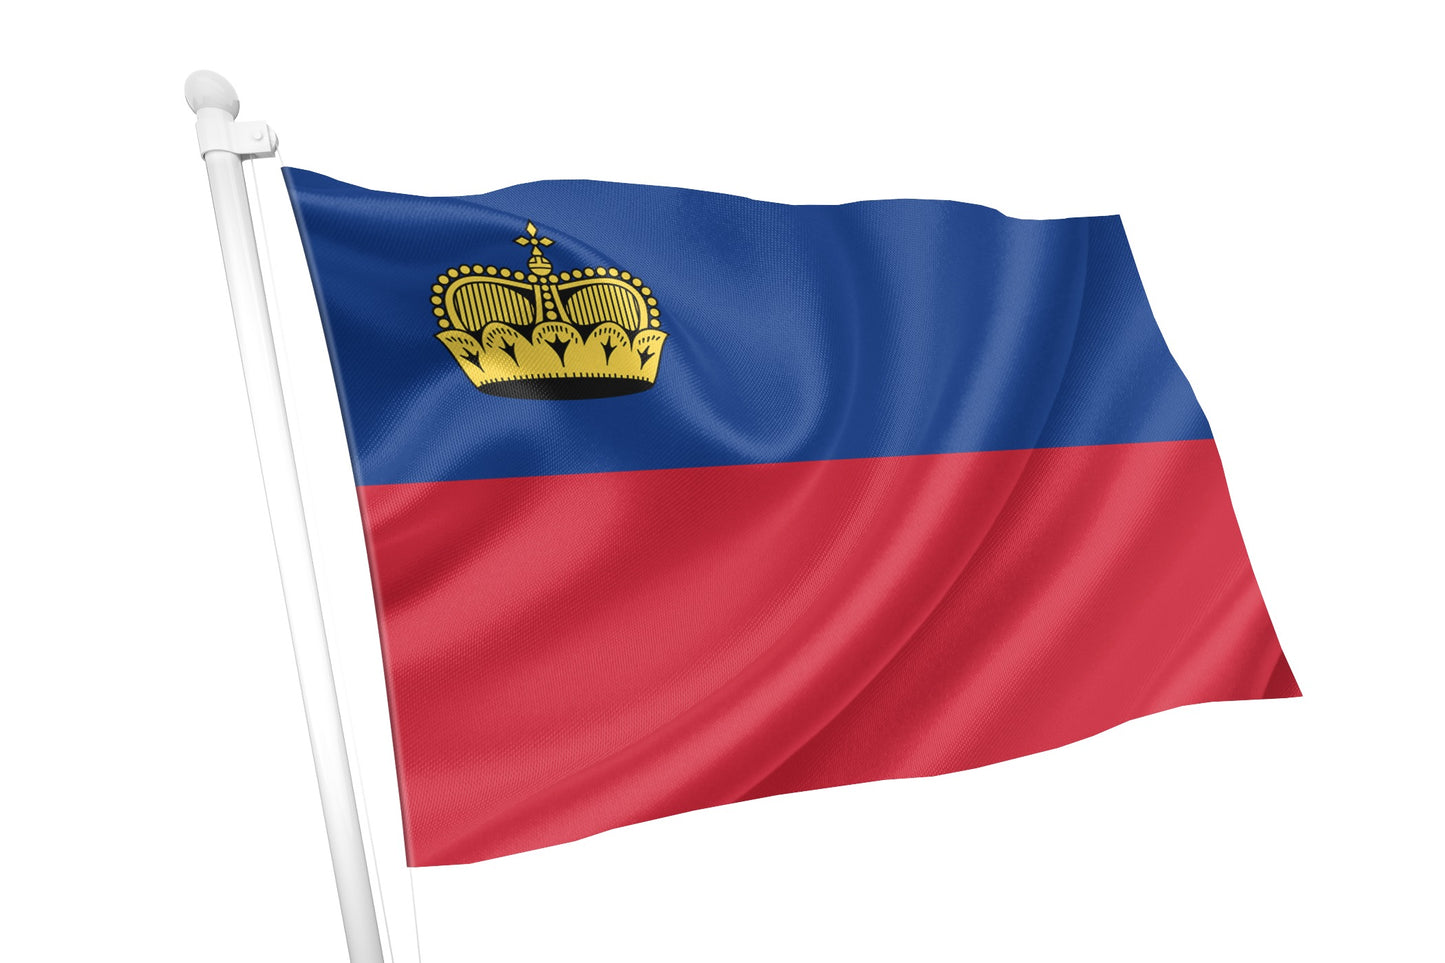 Liechtenstein National Flag